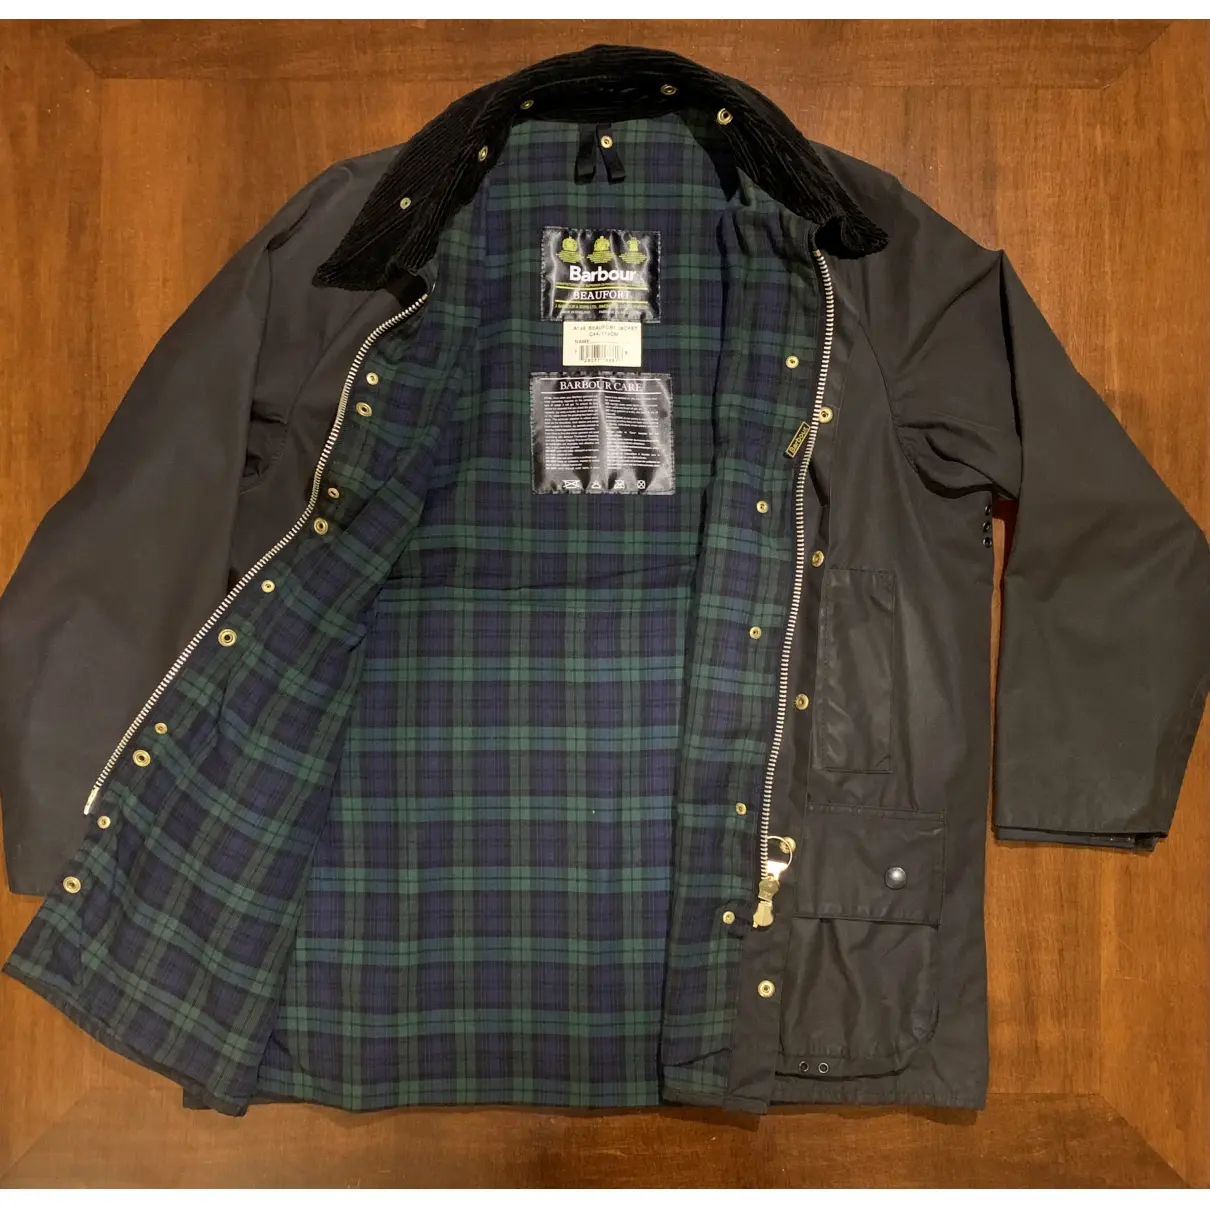 Buy Barbour Jacket online - Vintage